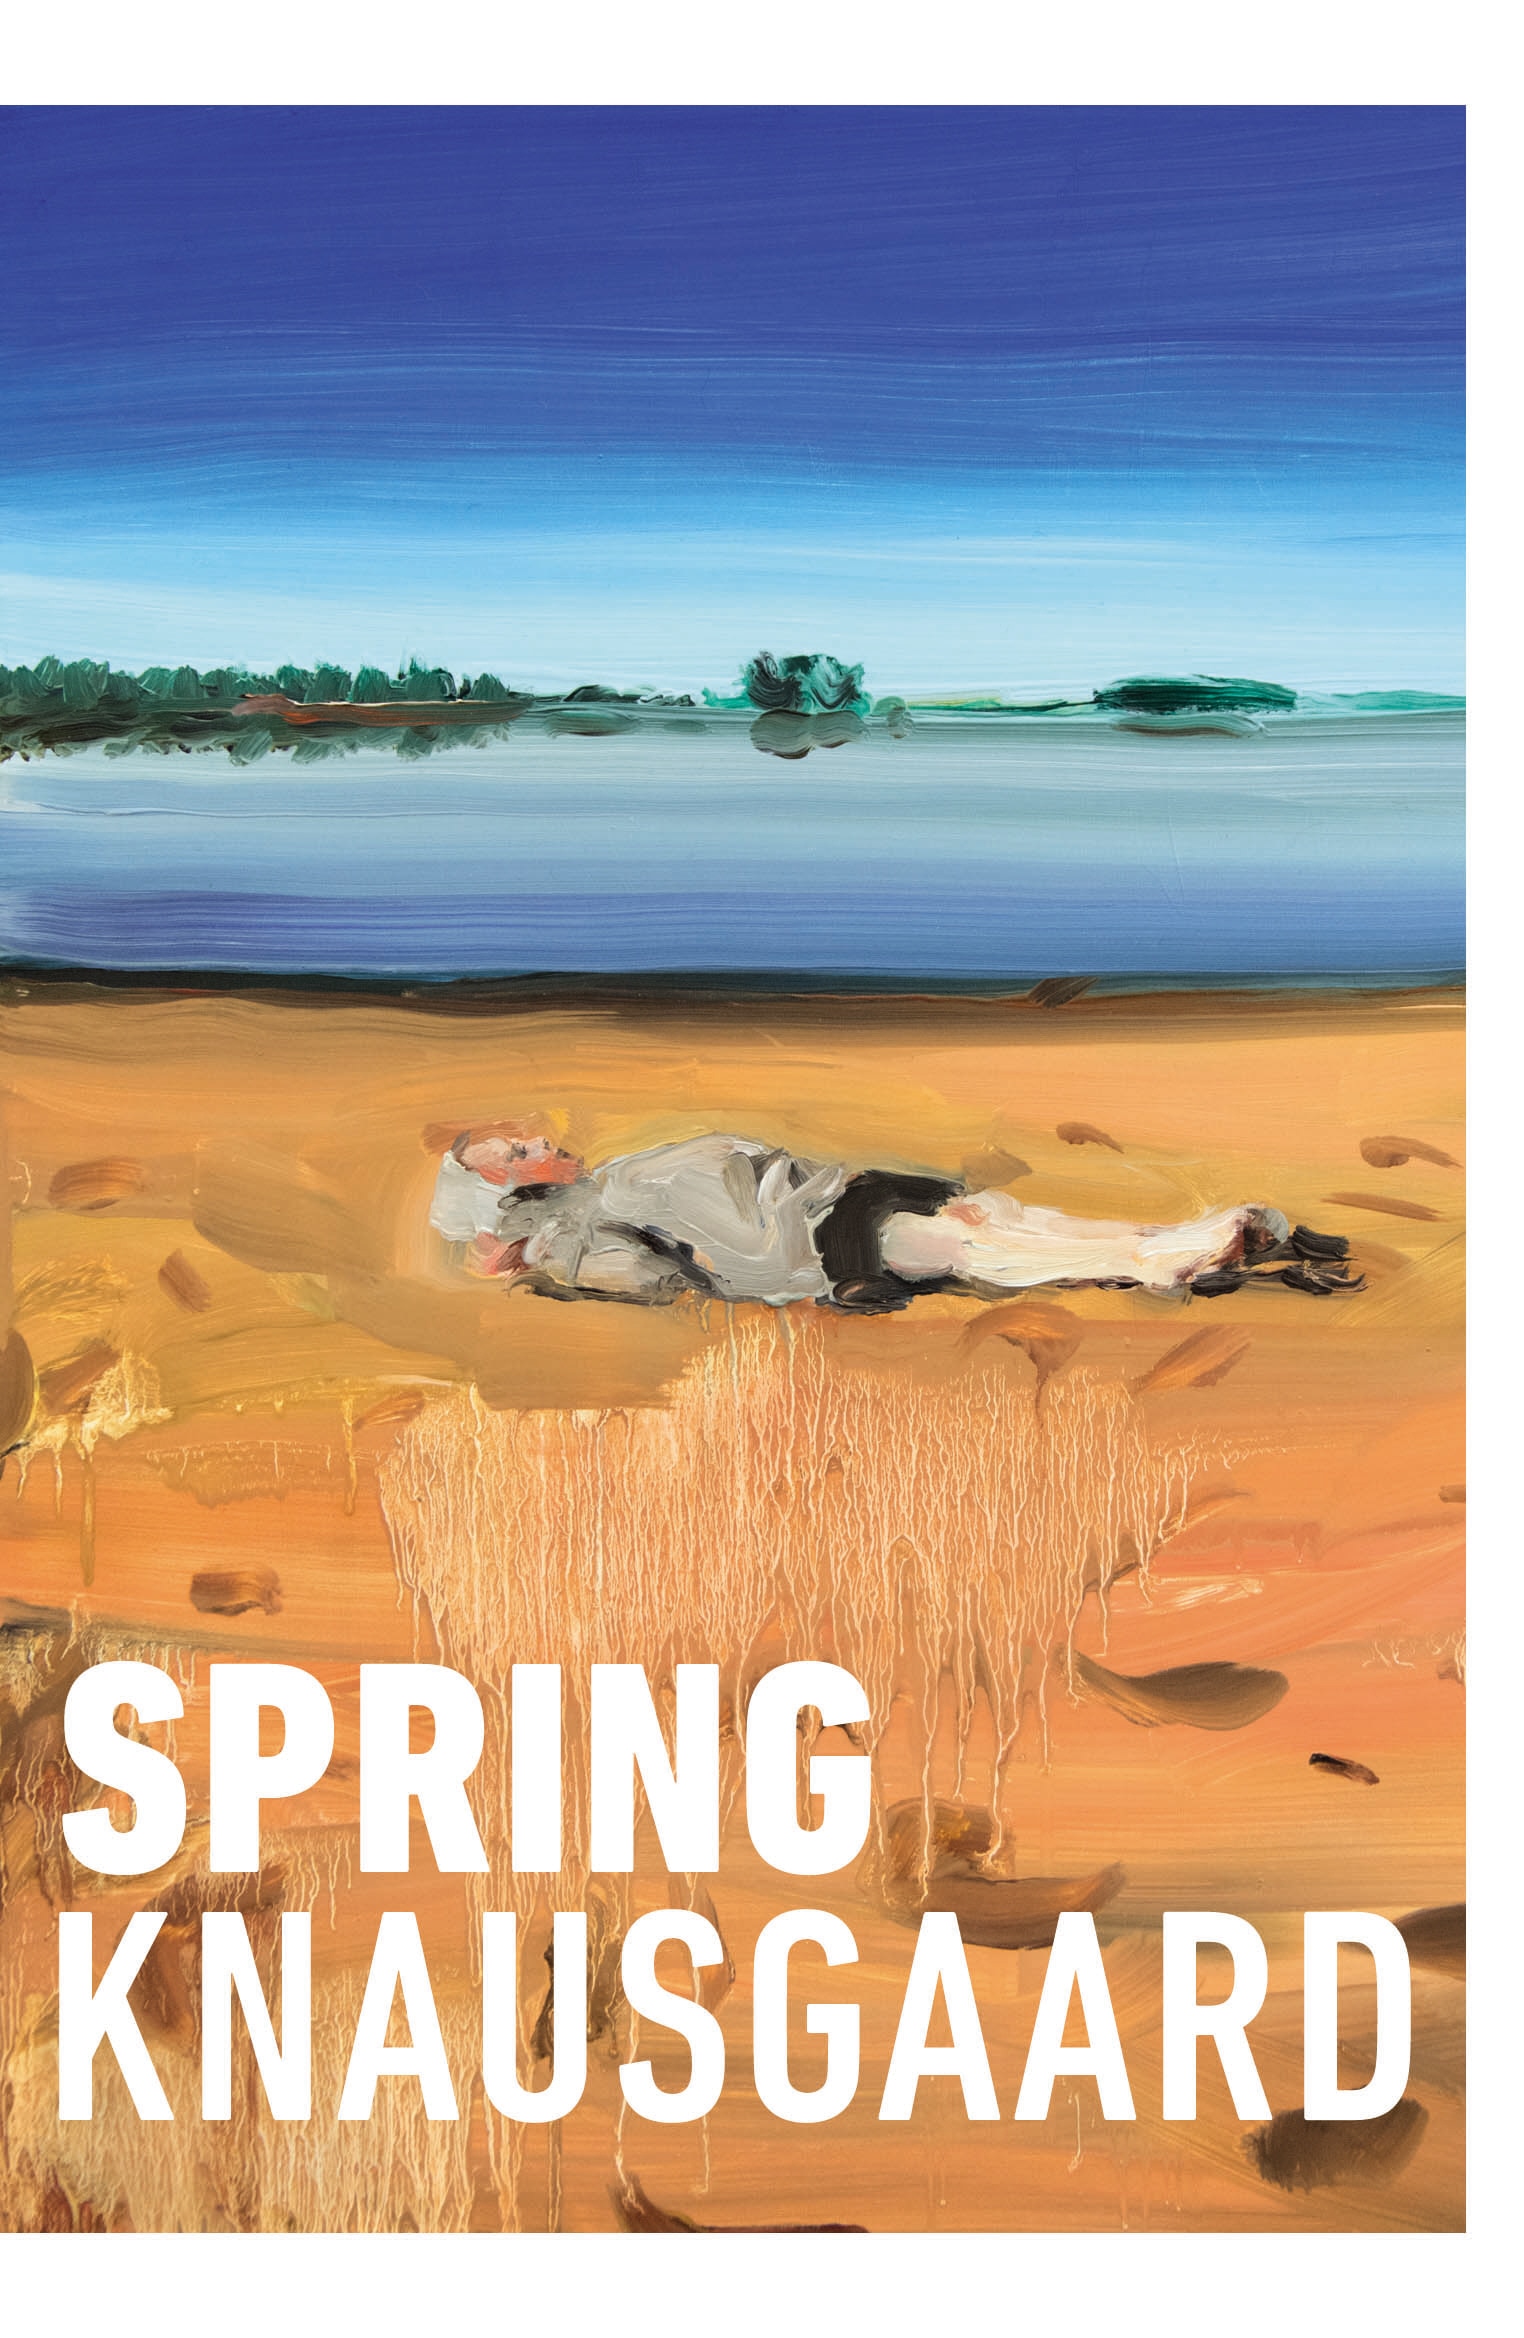 Book “Spring” by Karl Ove Knausgaard — March 3, 2022